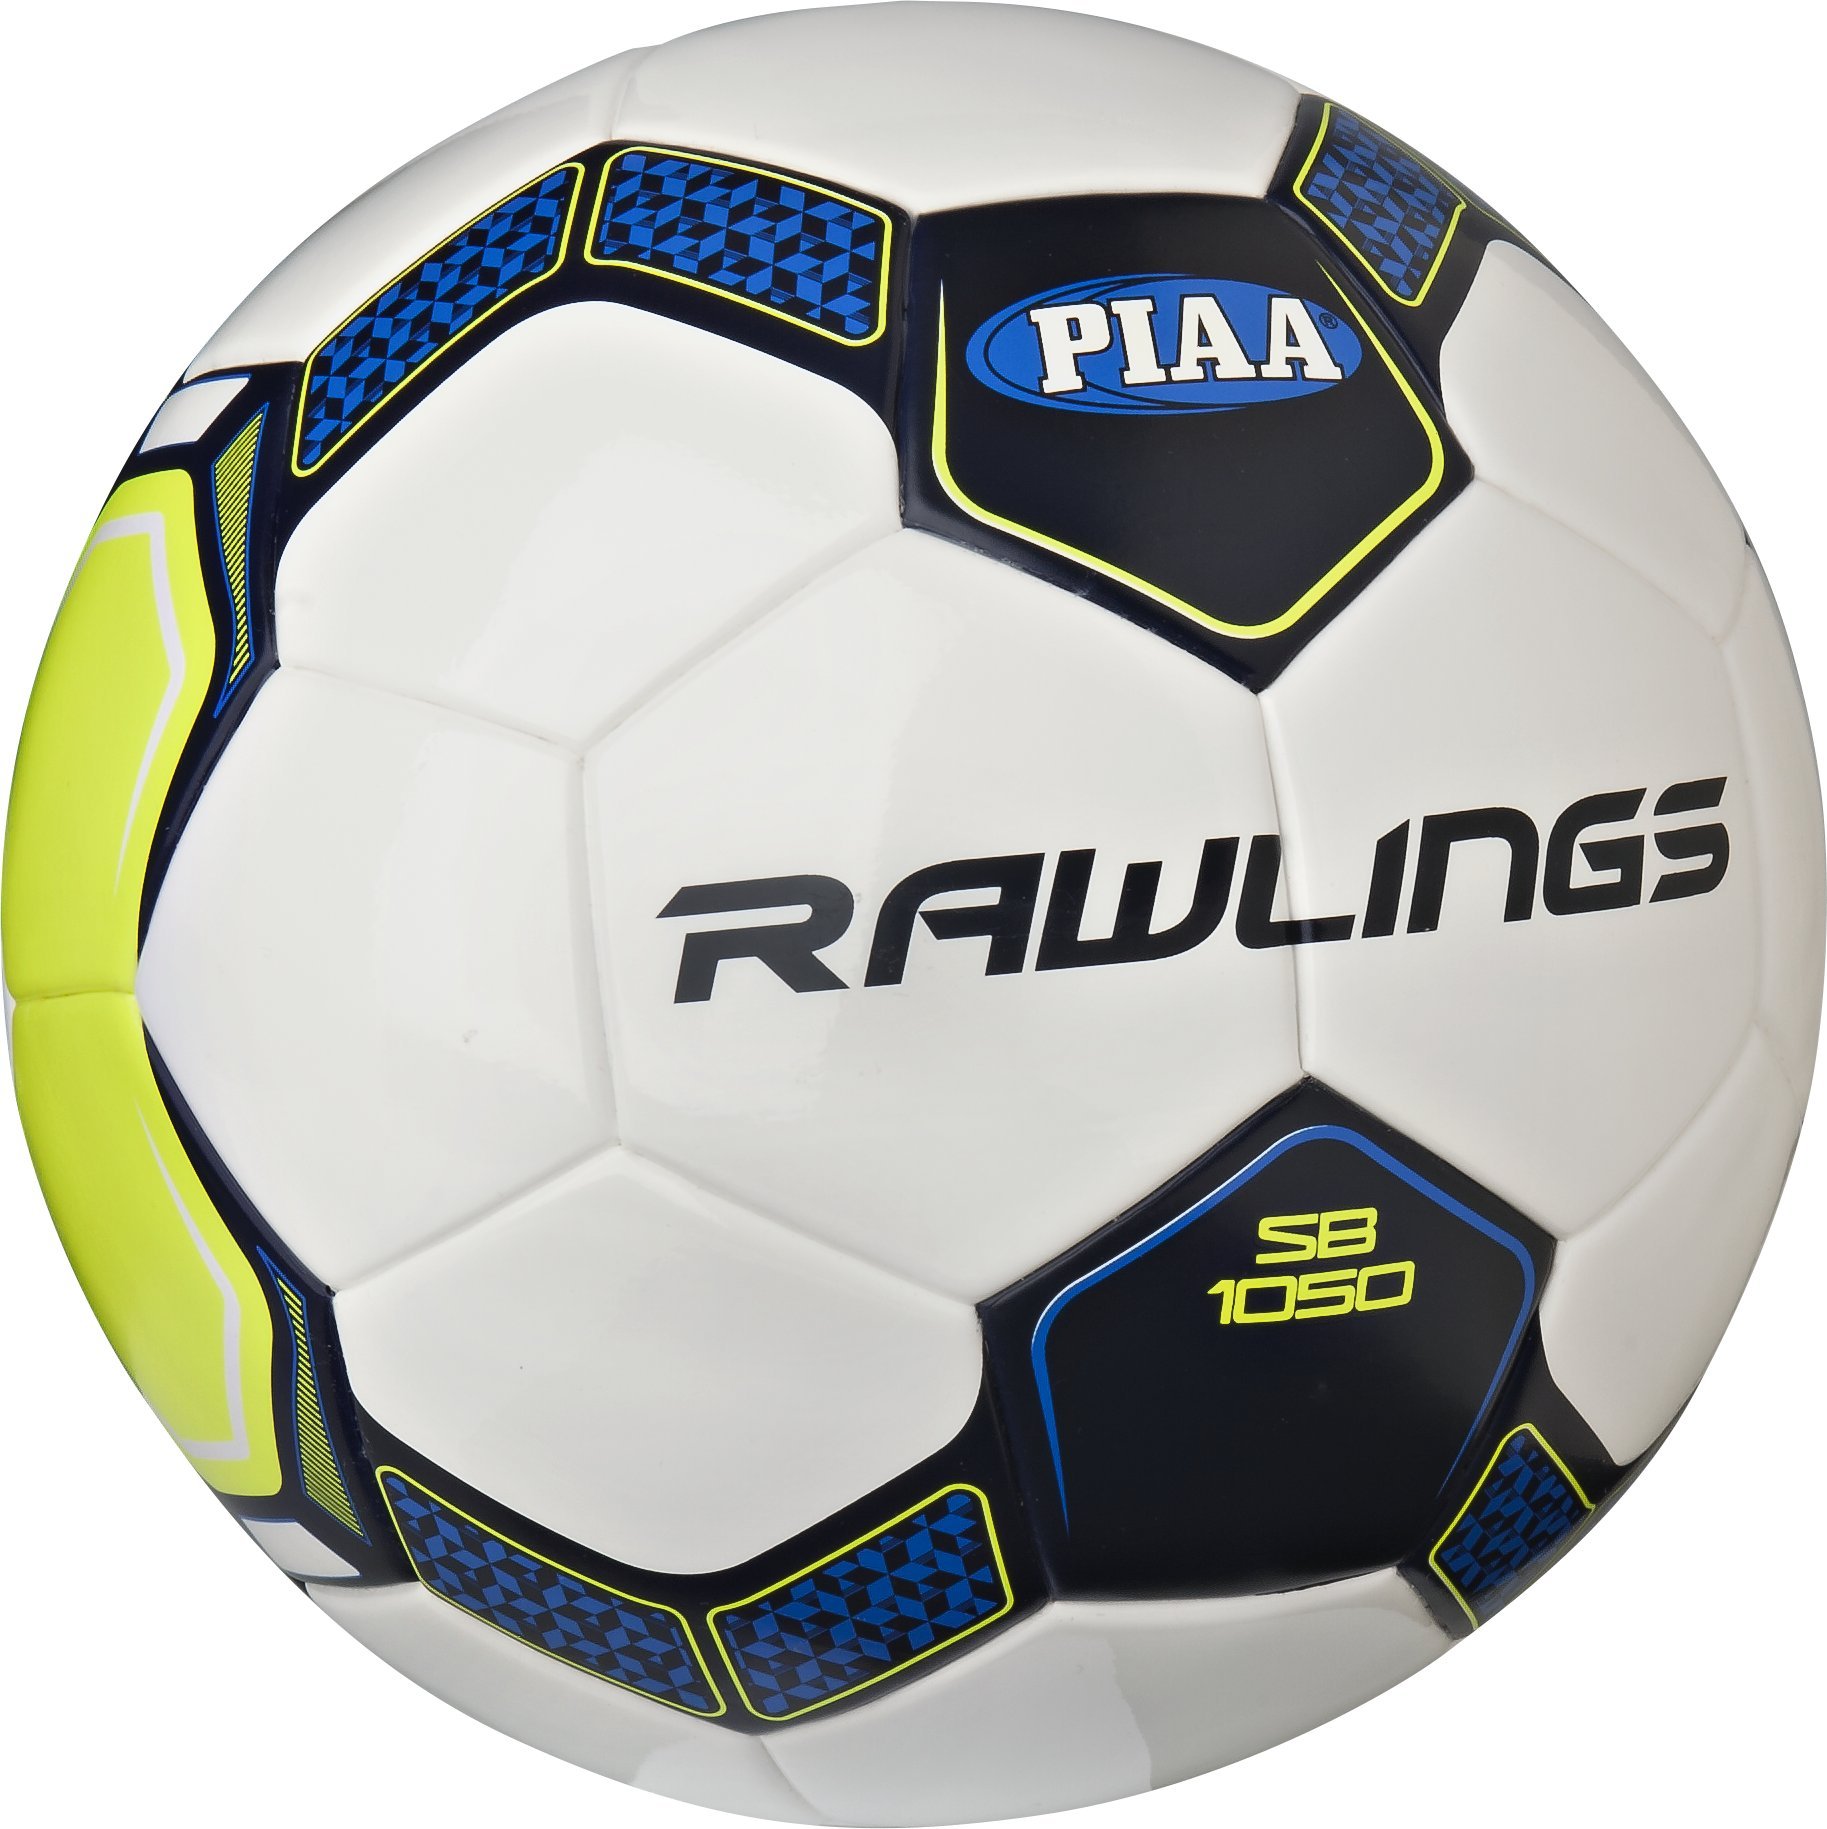 Rawlings SB1050 PIAA Soccer Ball, Size 5, White